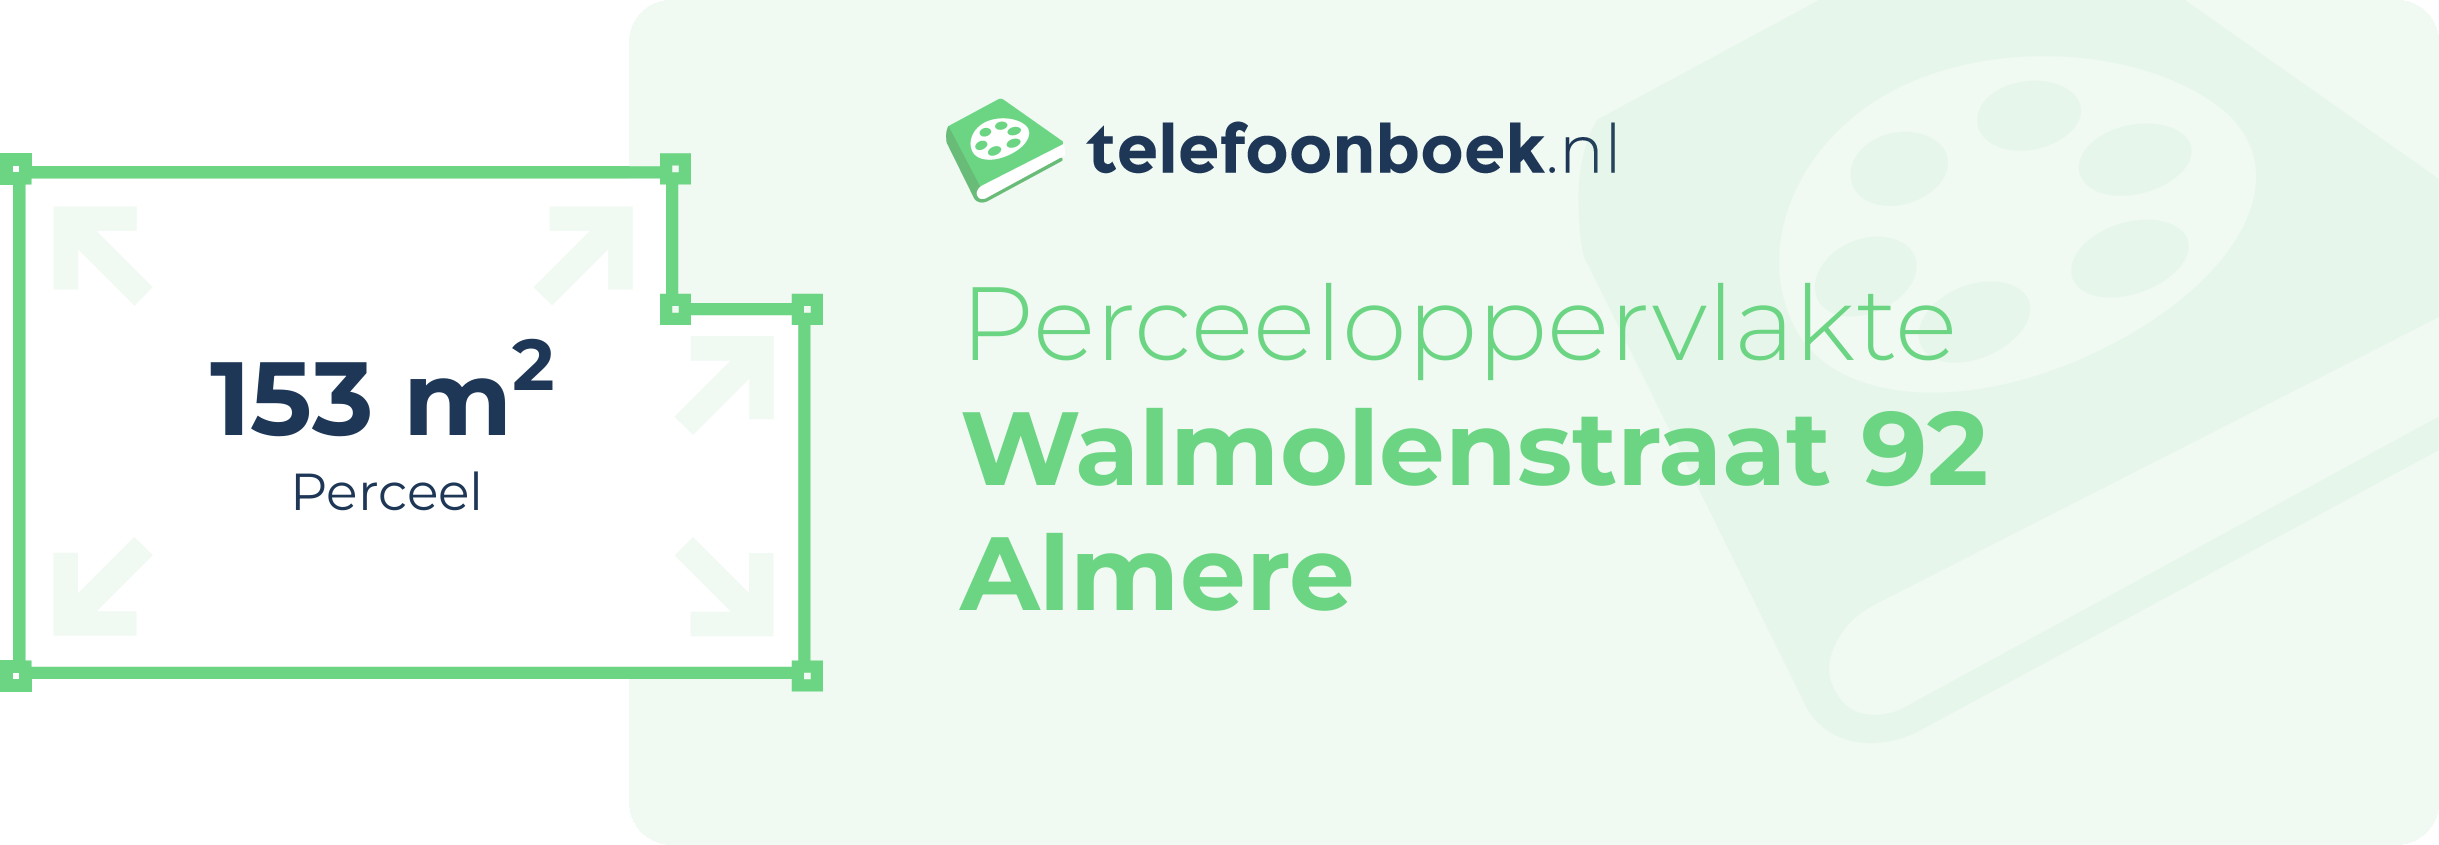 Perceeloppervlakte Walmolenstraat 92 Almere